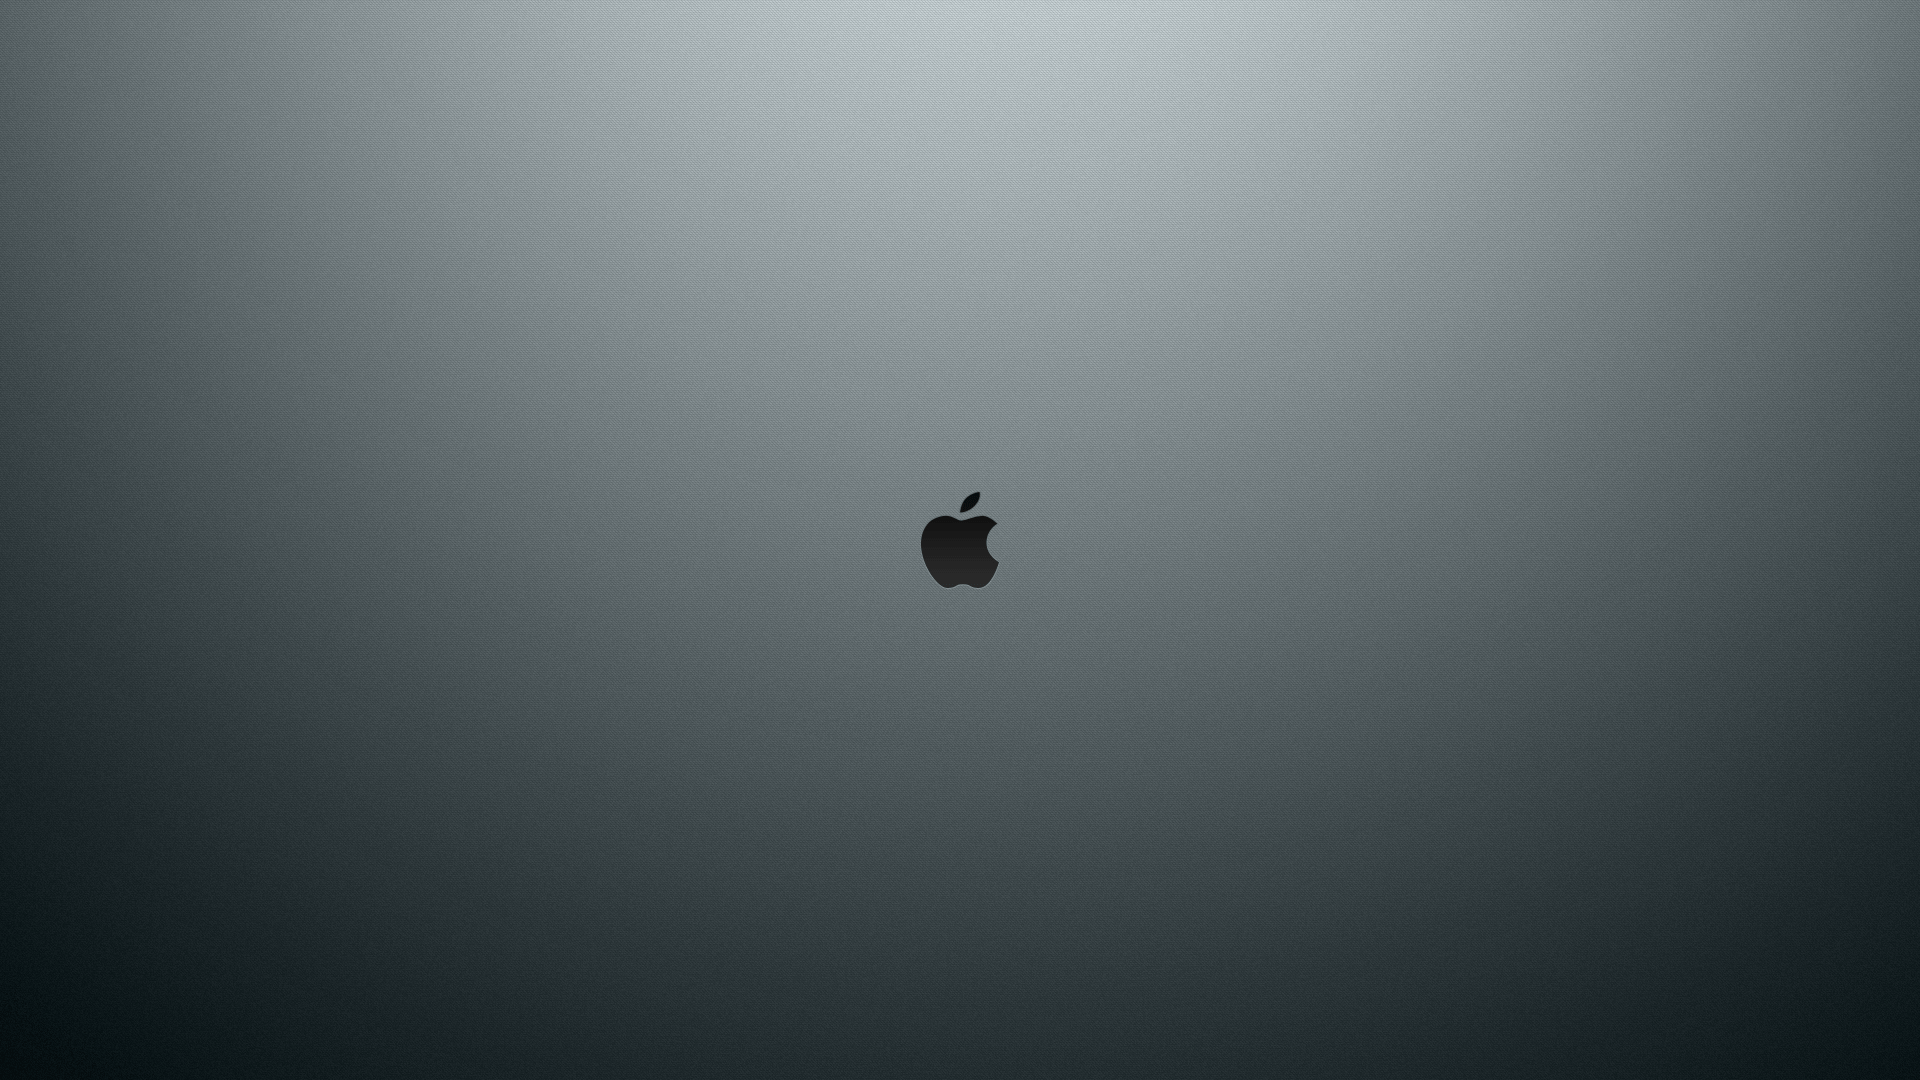 Just the Apple logo